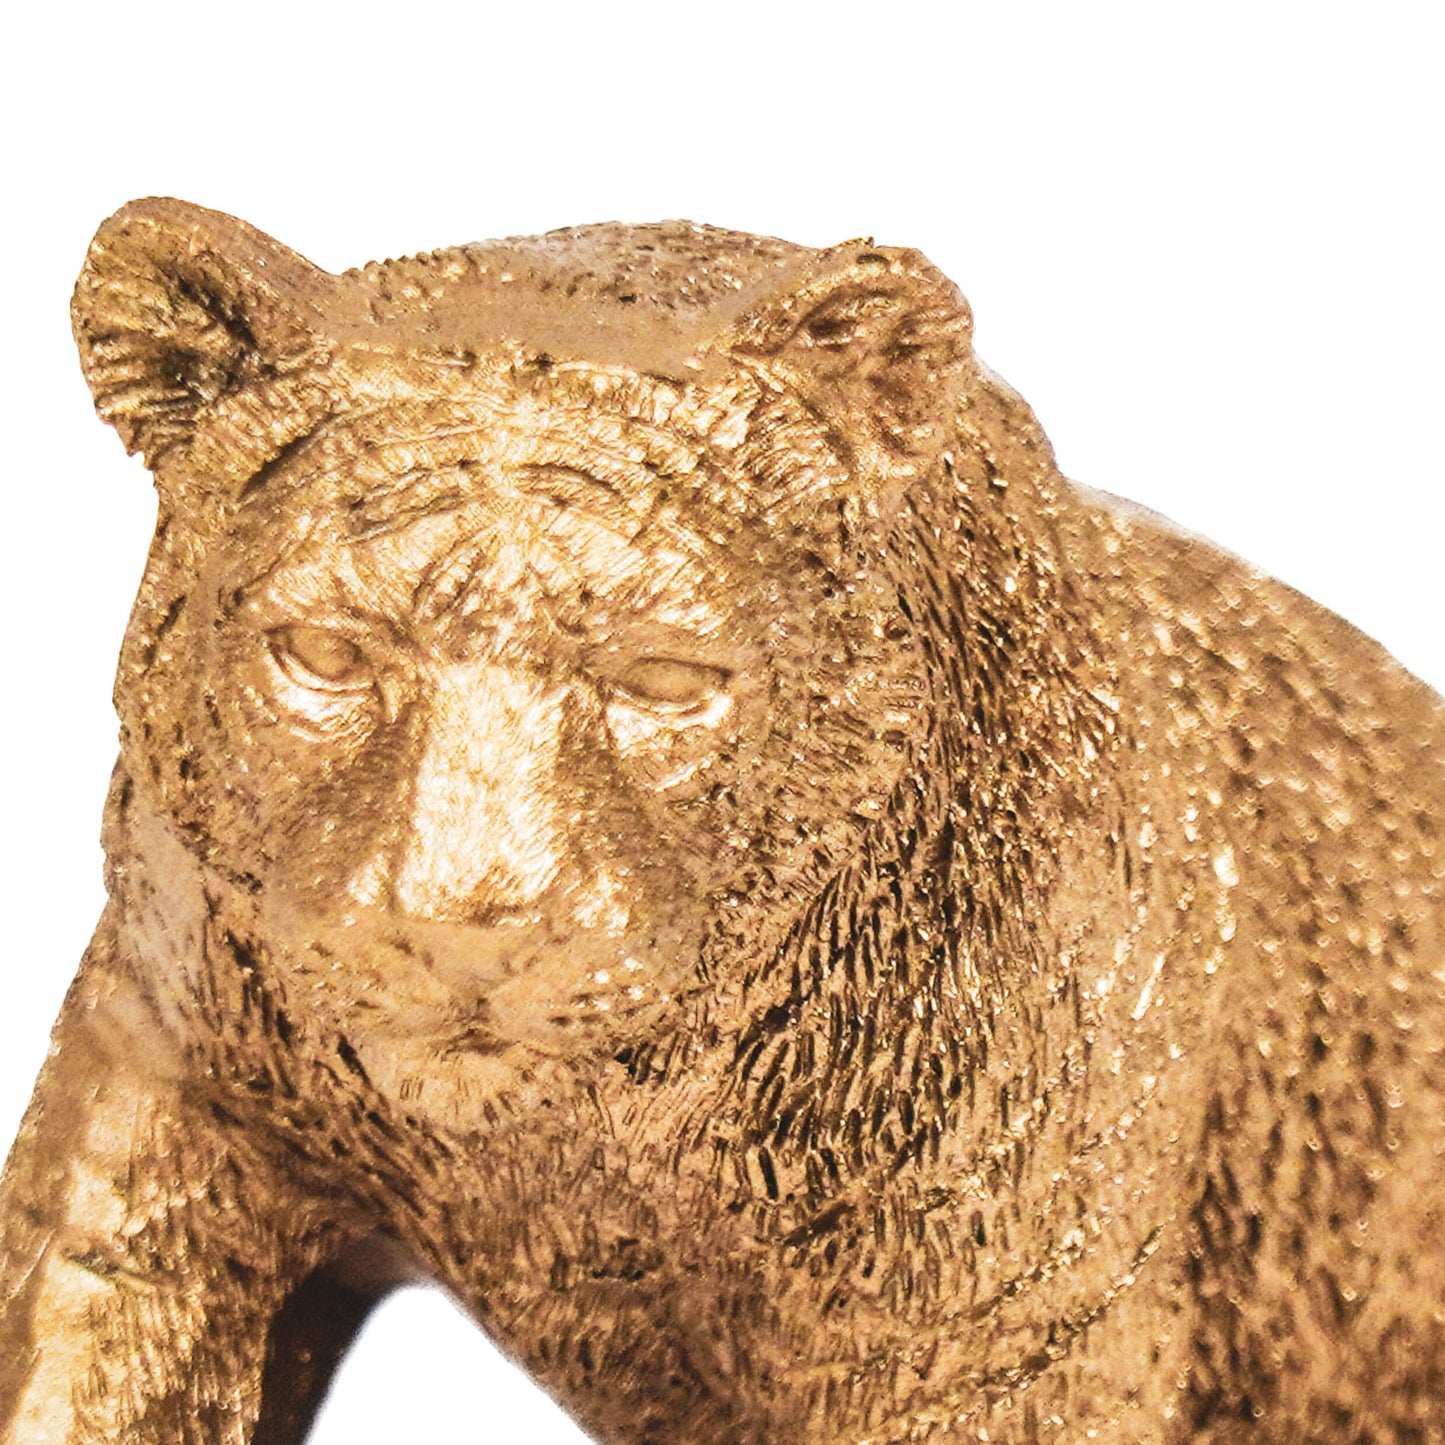 HV Tiger Figurine - Gold - 10,6x6,5x9,5cm